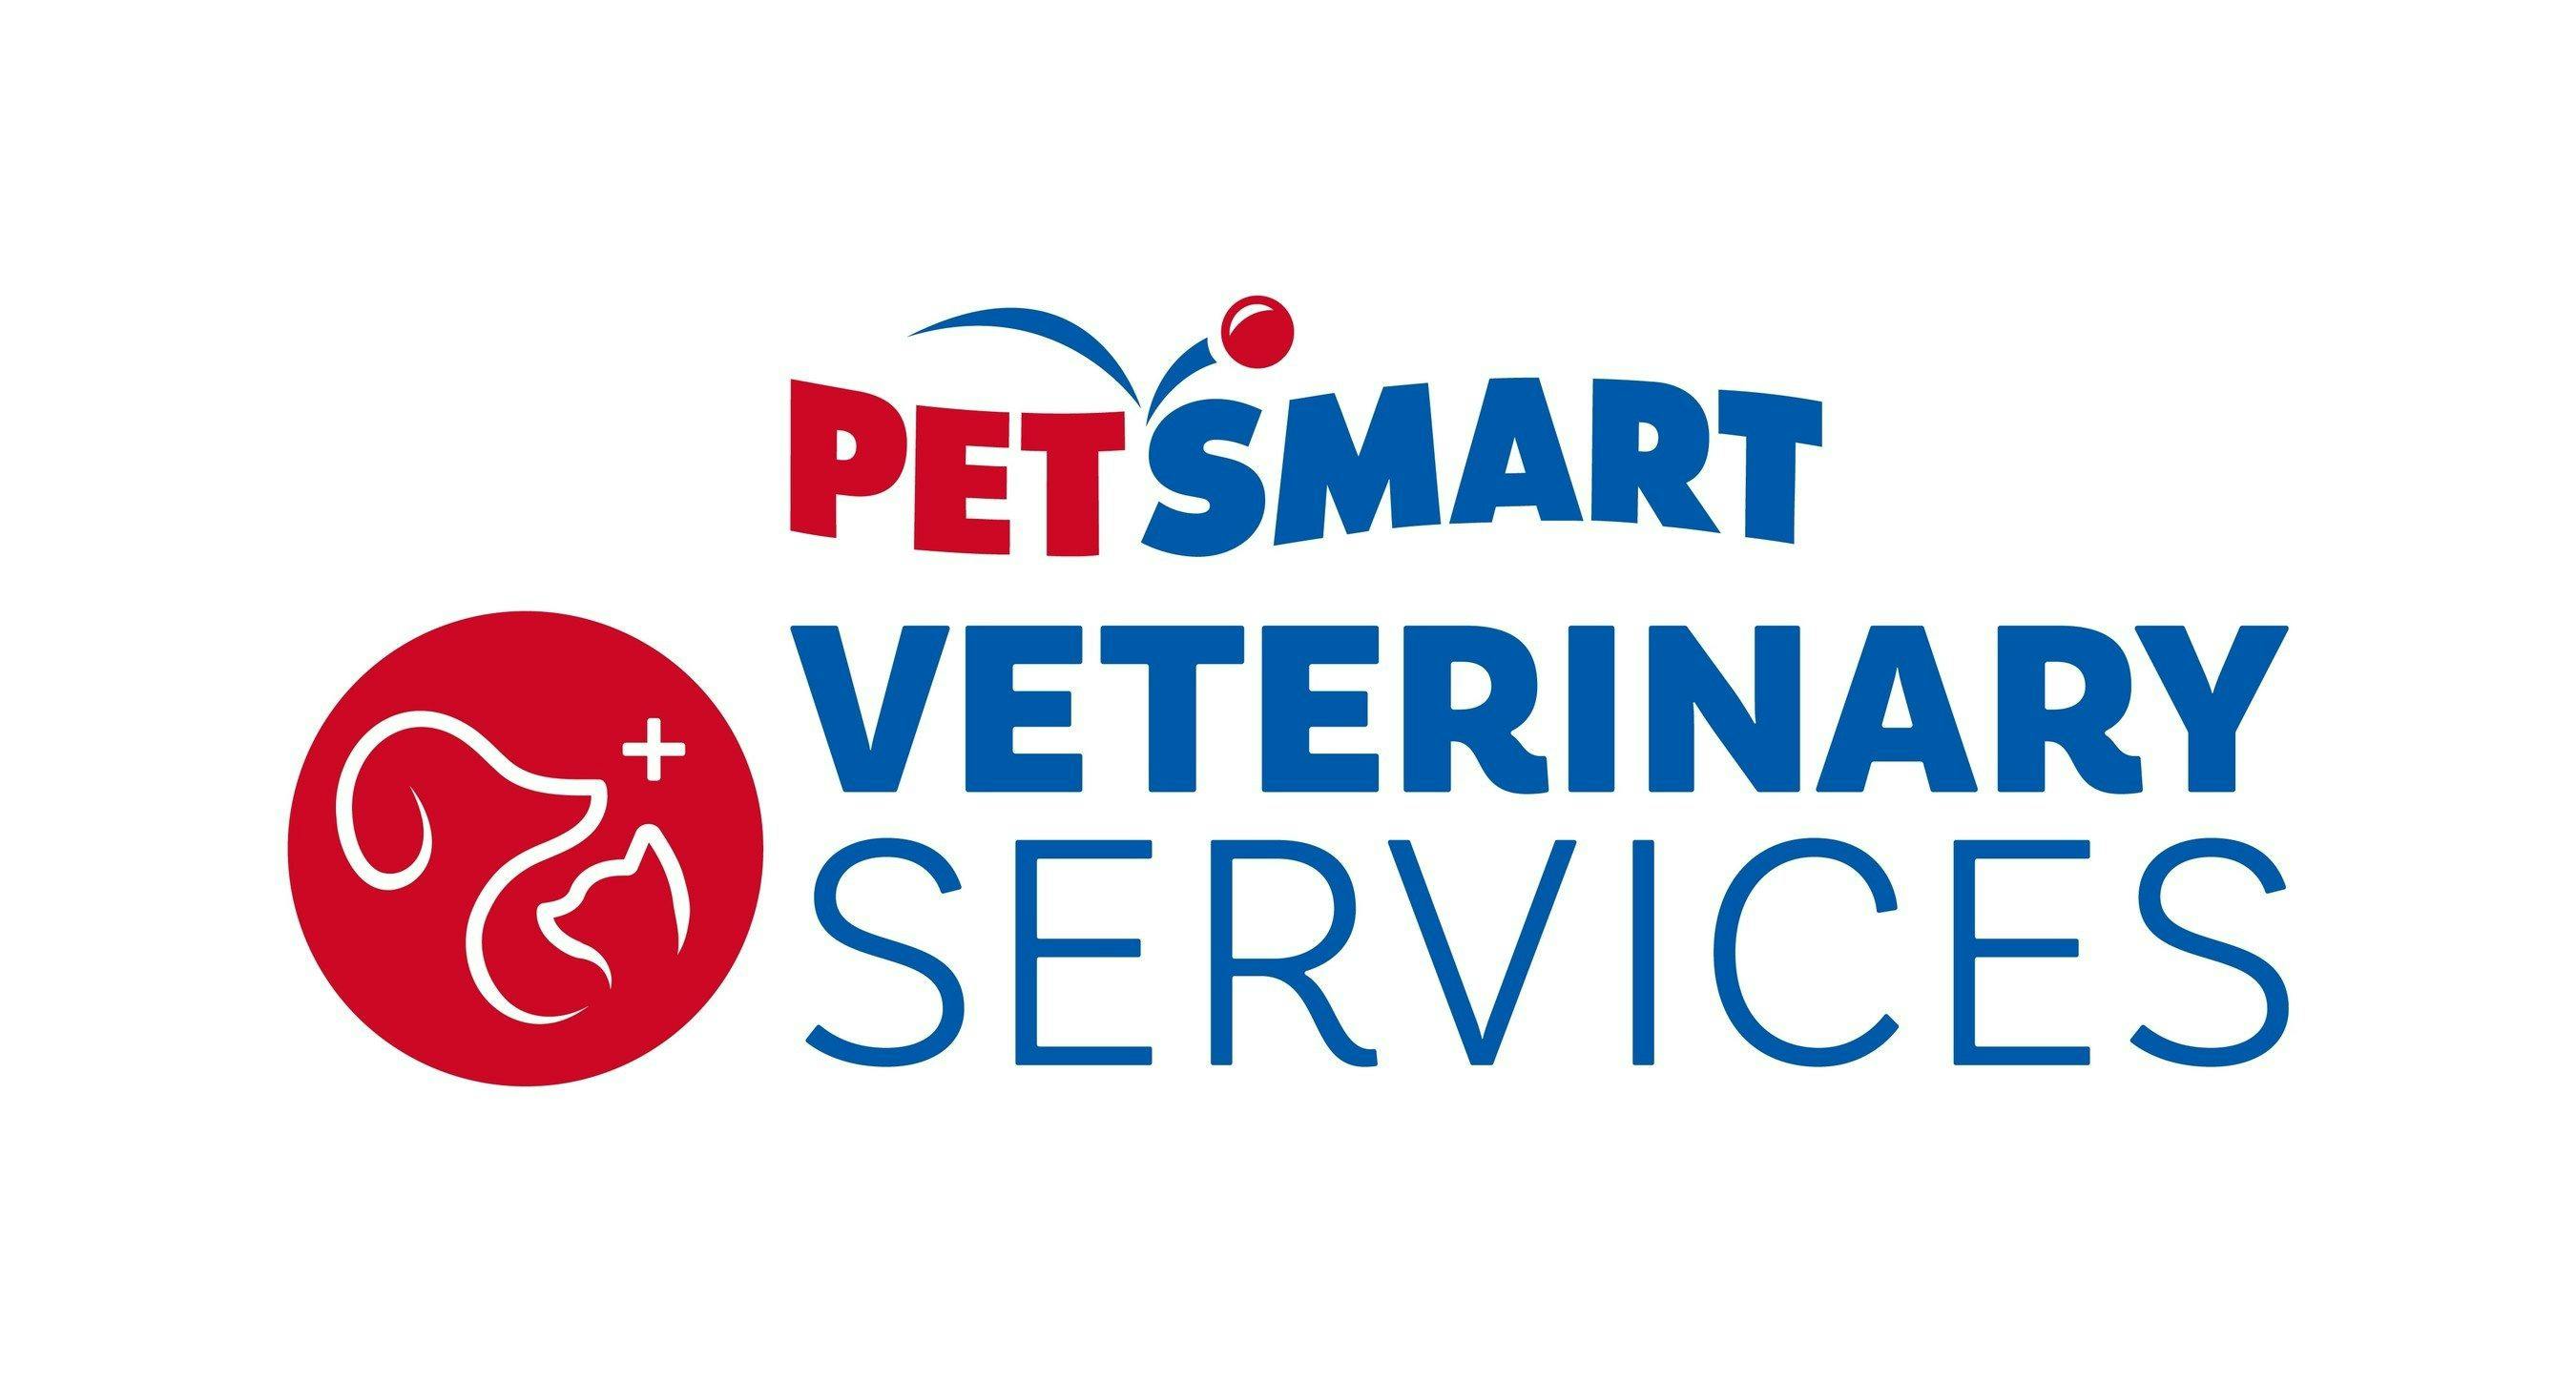 PetSmart Veterinary Services empowers veterinarians to open practices inside PetSmart stores